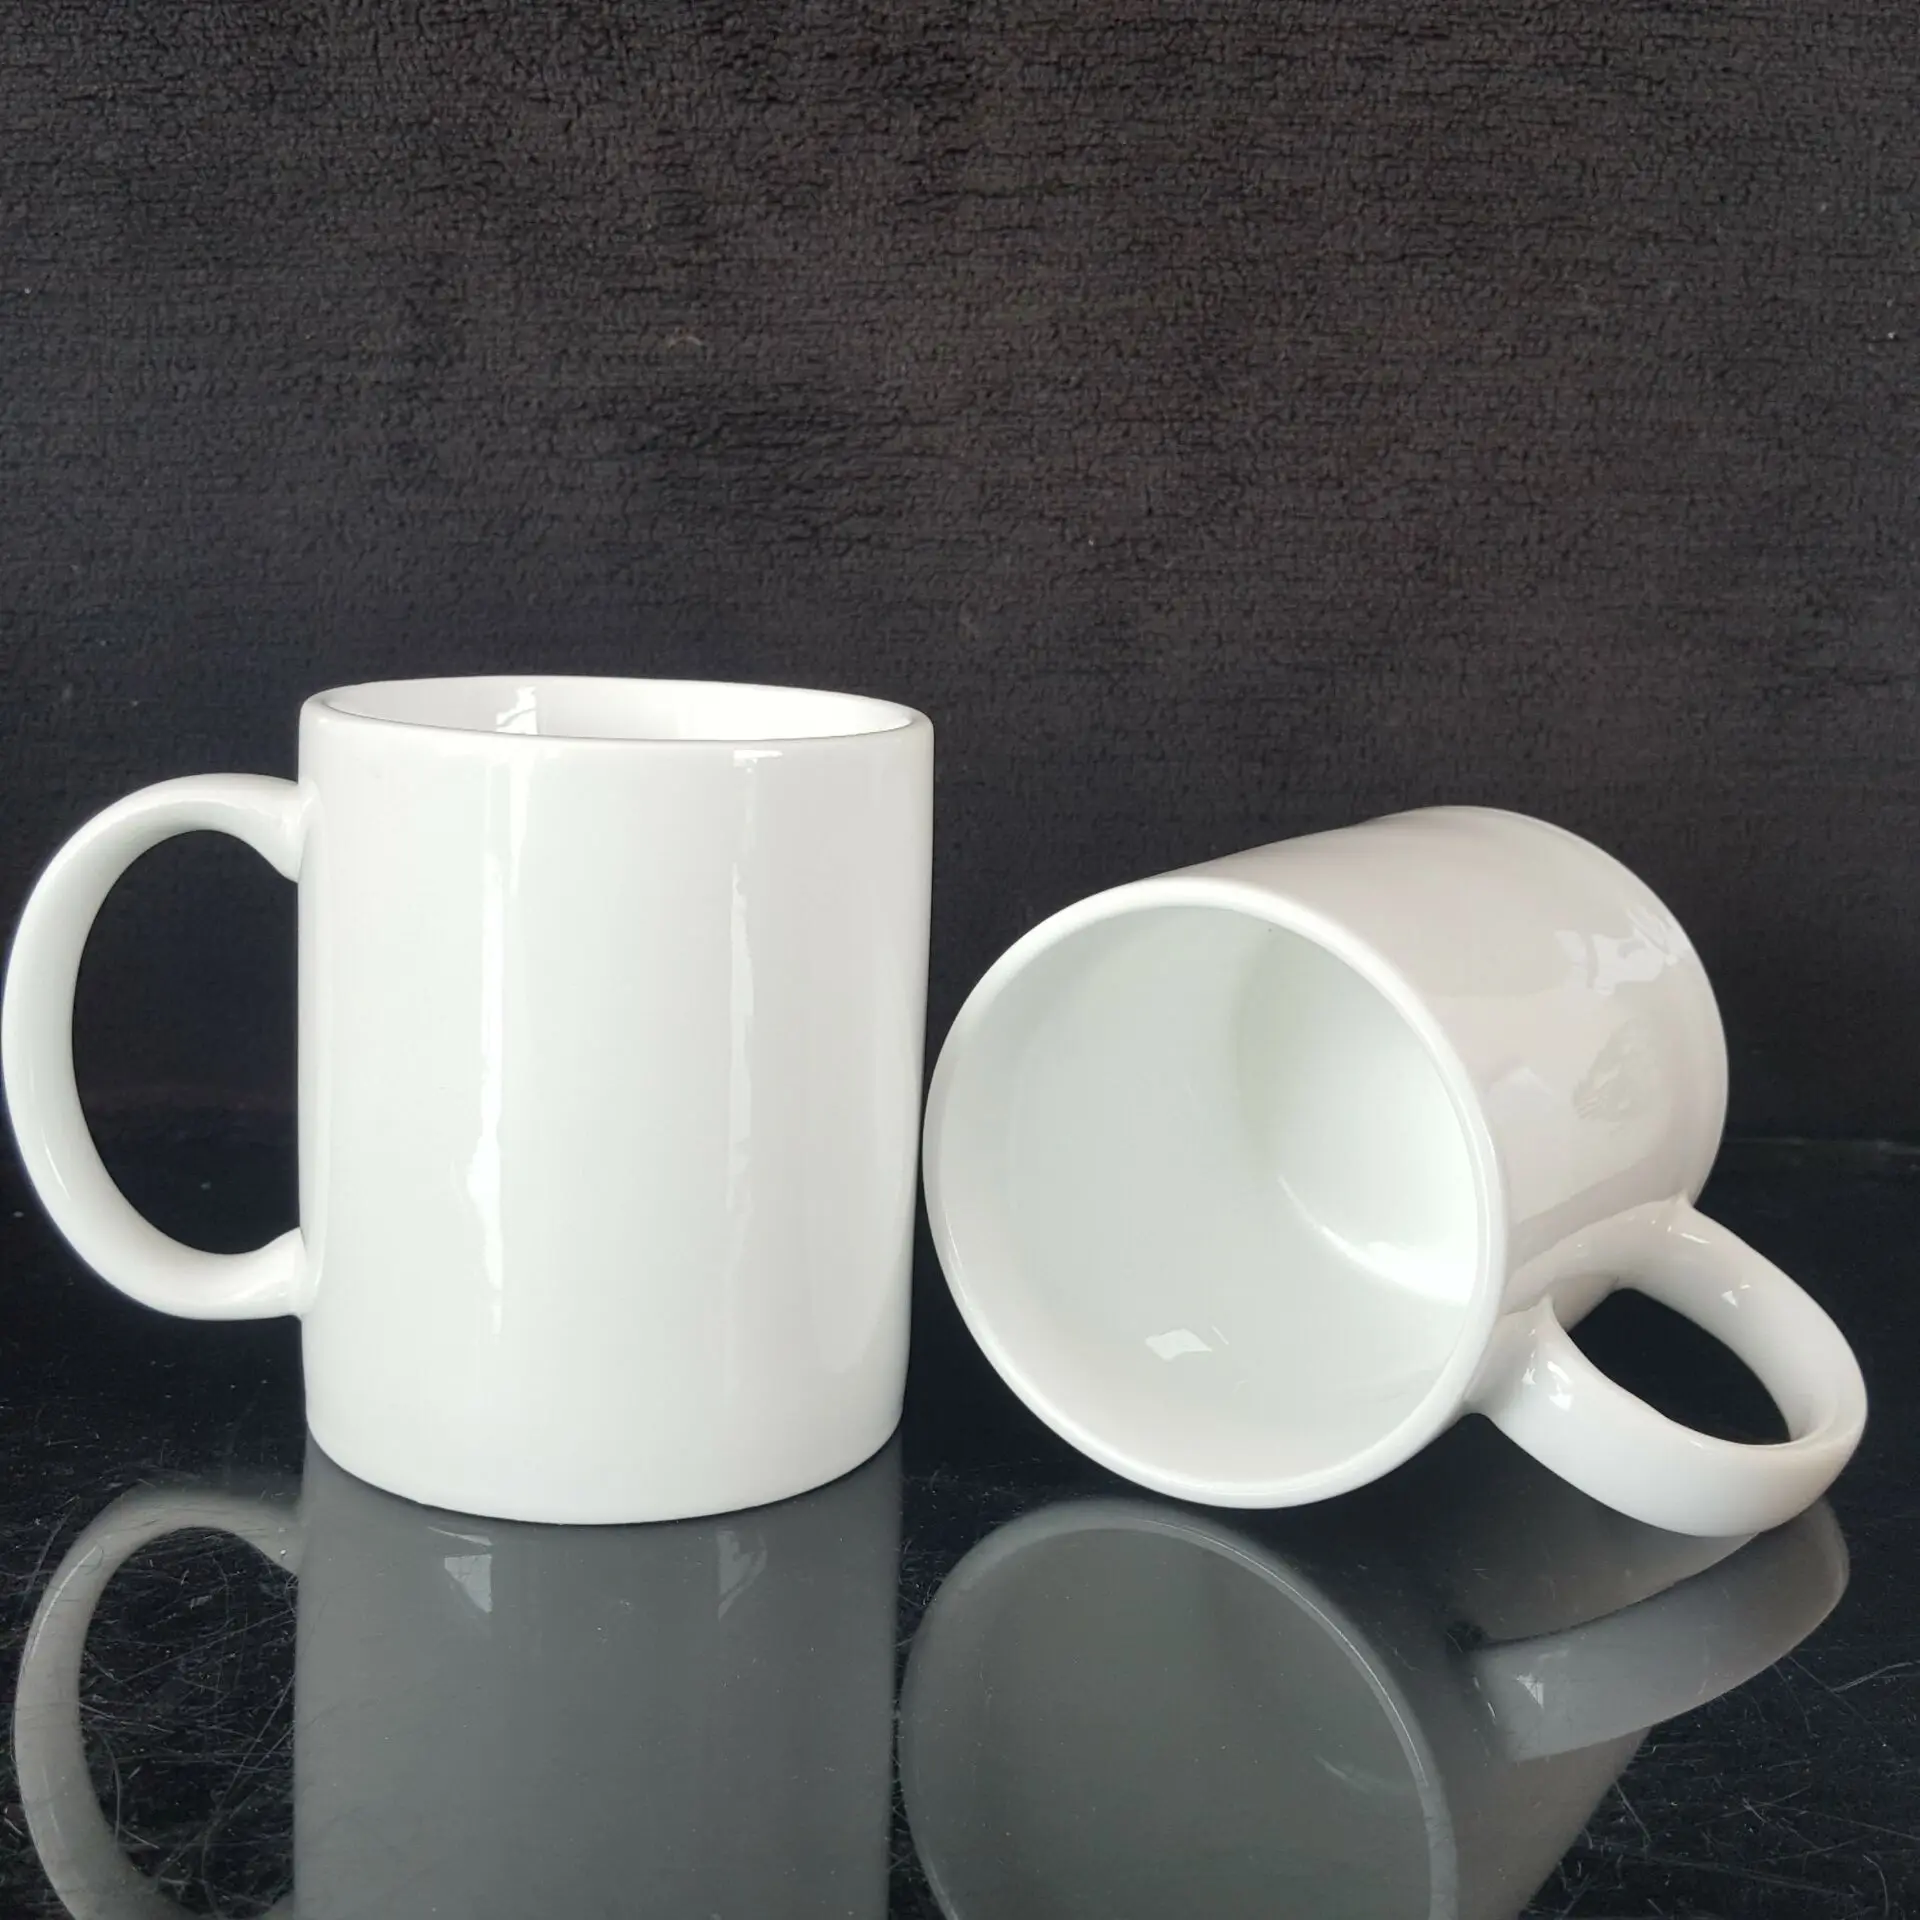 Case of 12 Mug 11oz Sublimation Cup Blank Coffee Mug /Cup Blank White Mugs/Cups 